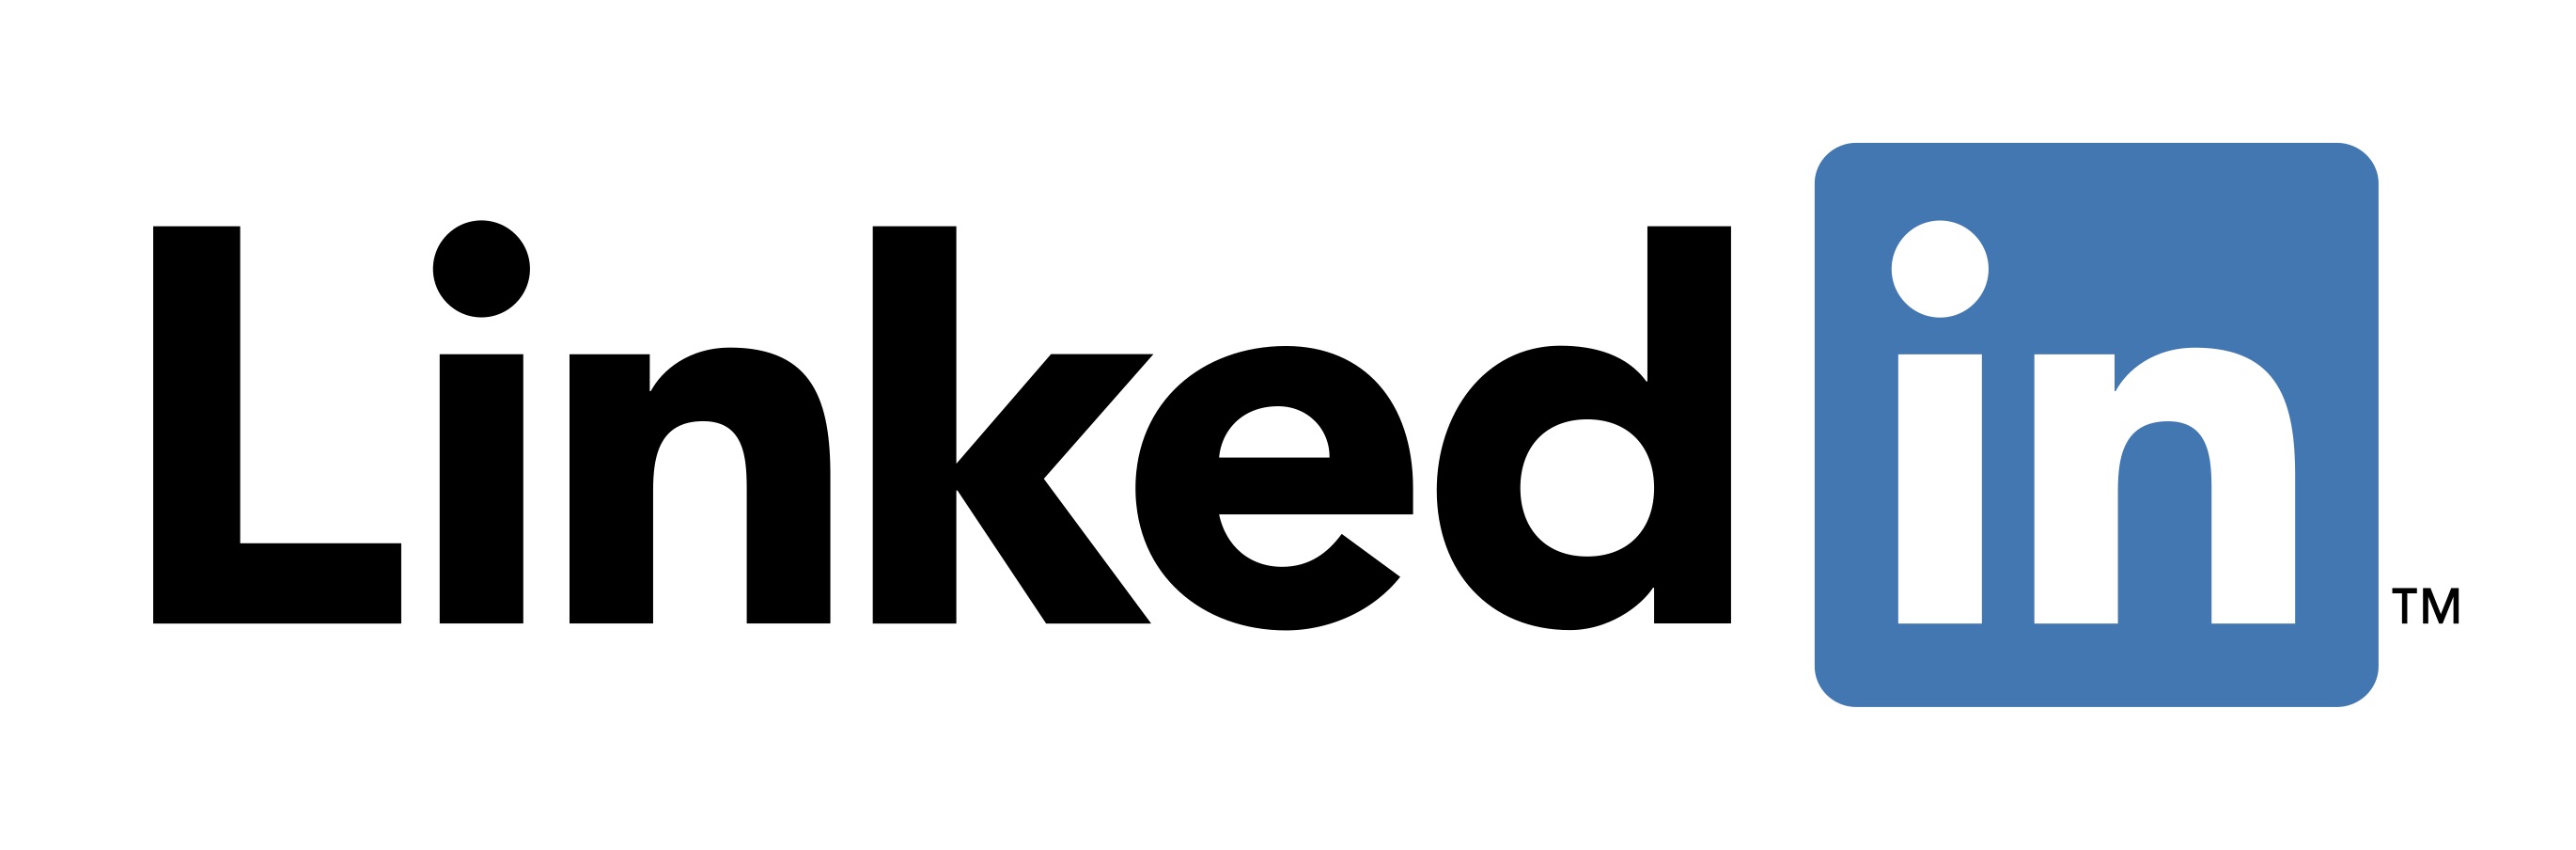 El logo de LinkedIn es un emblema que está "dentro"